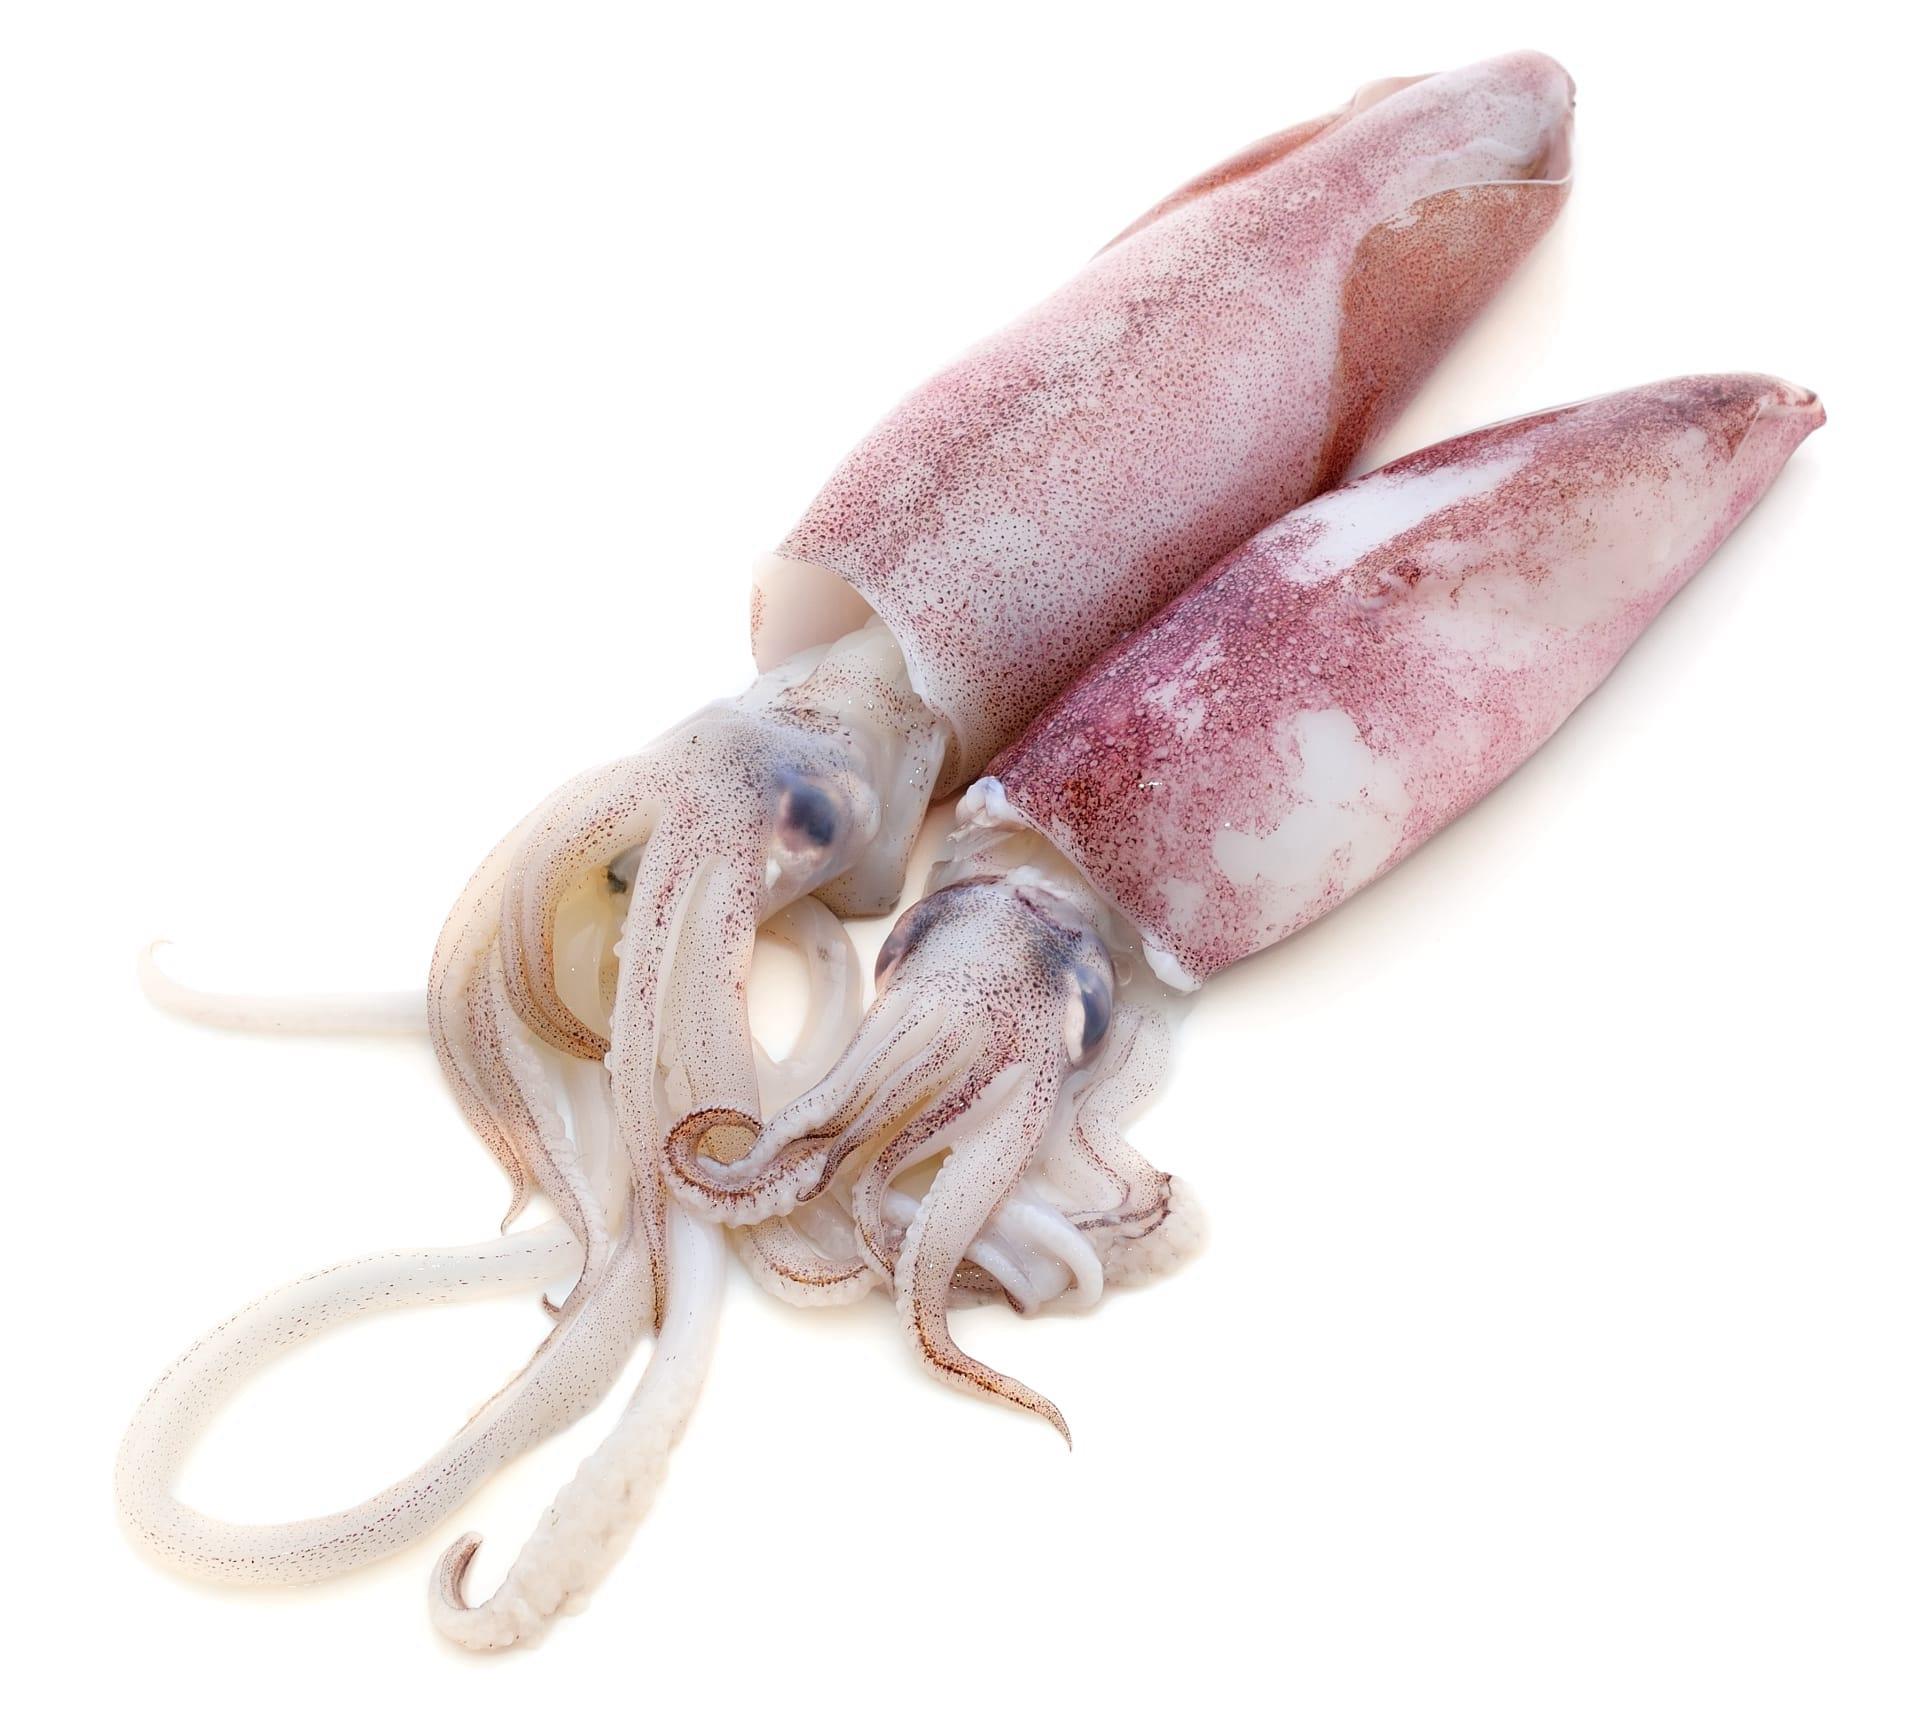 Needle squid pictures